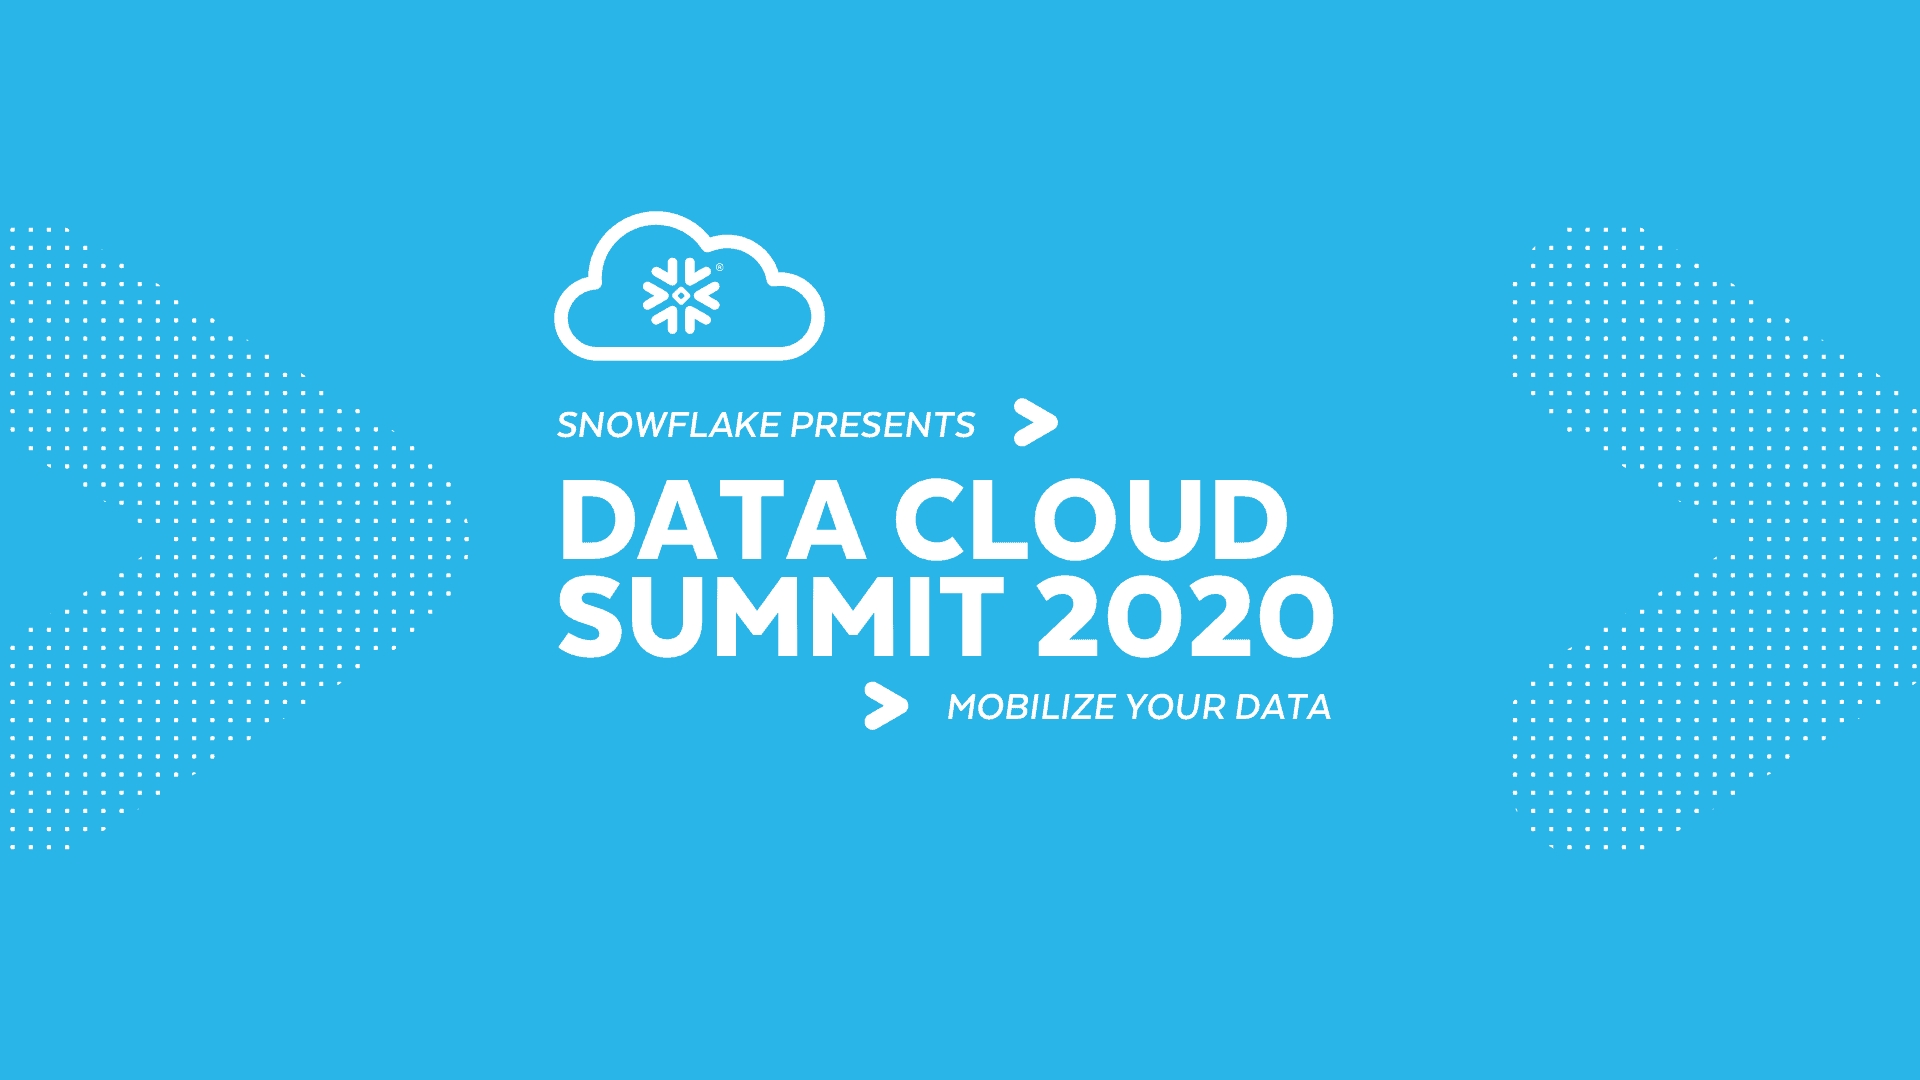 Data Cloud Summit 2020 Announcements